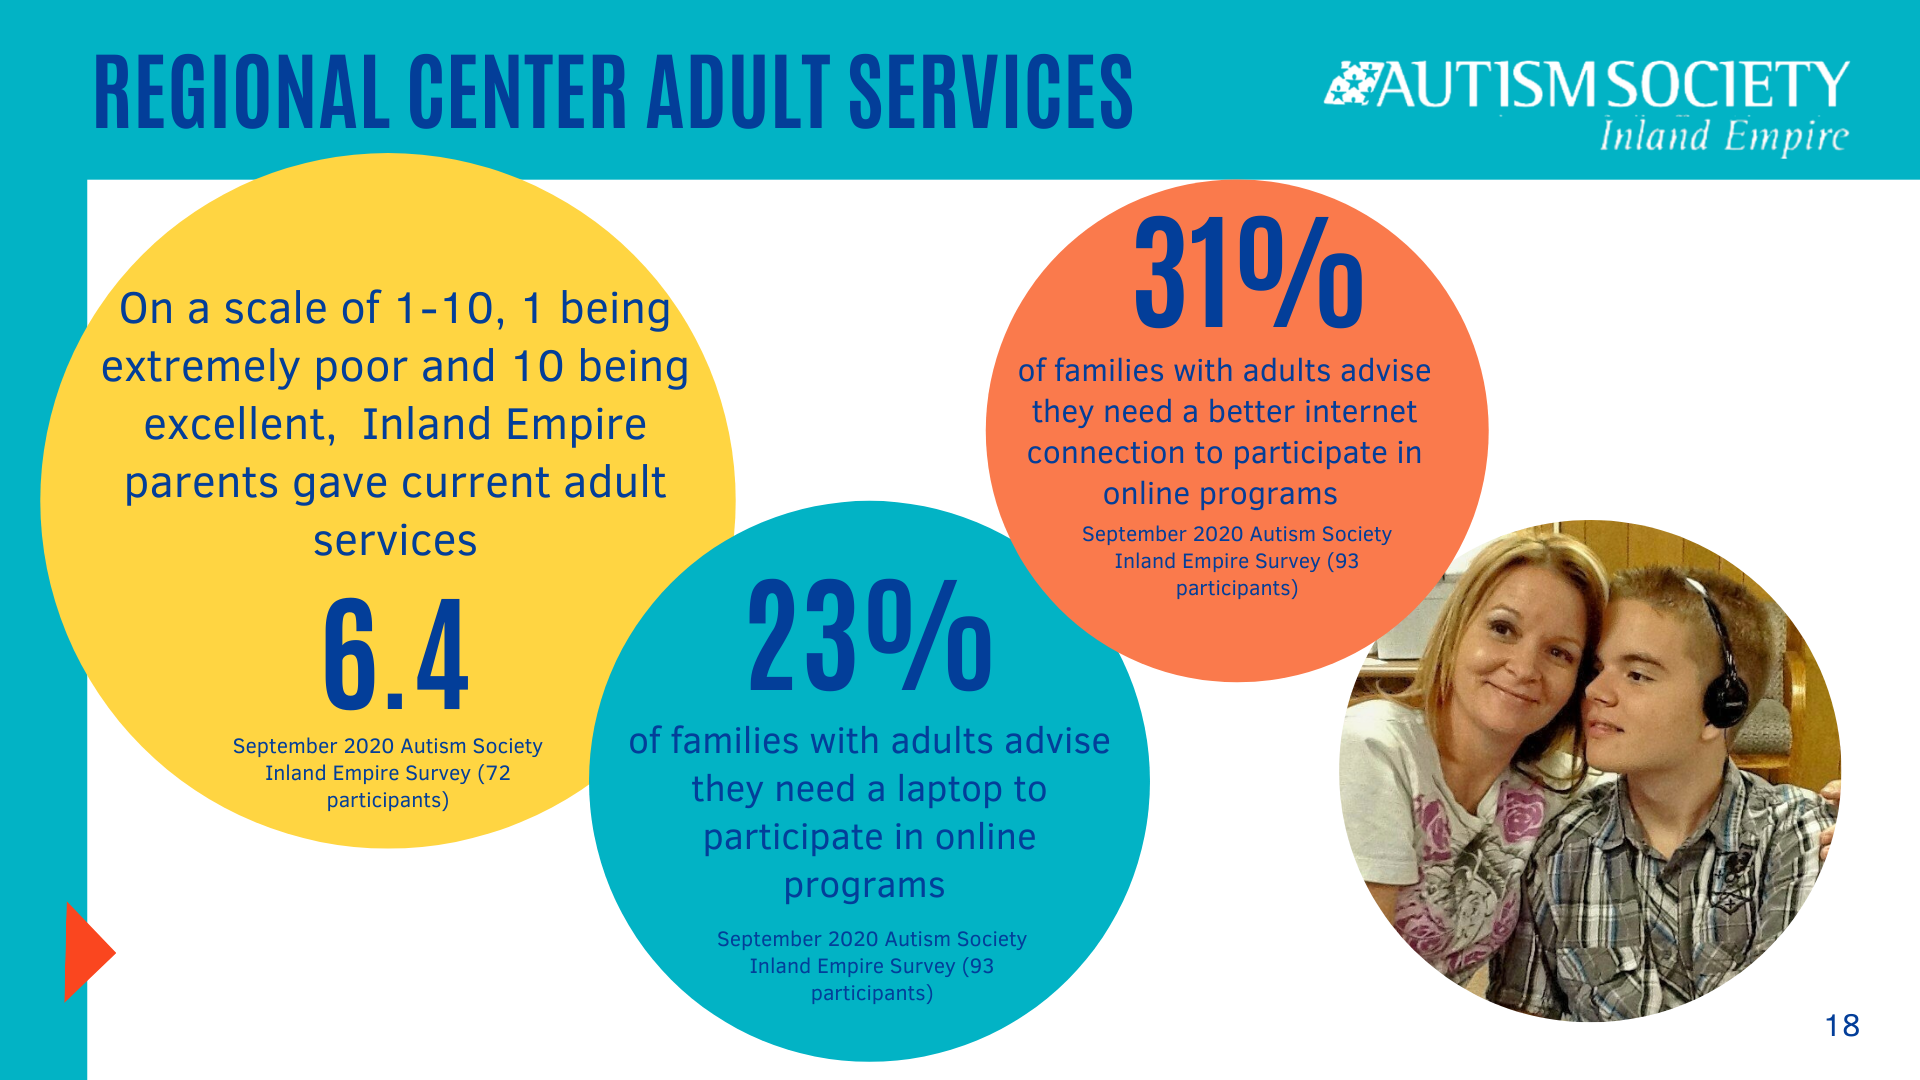 Regional center adult services